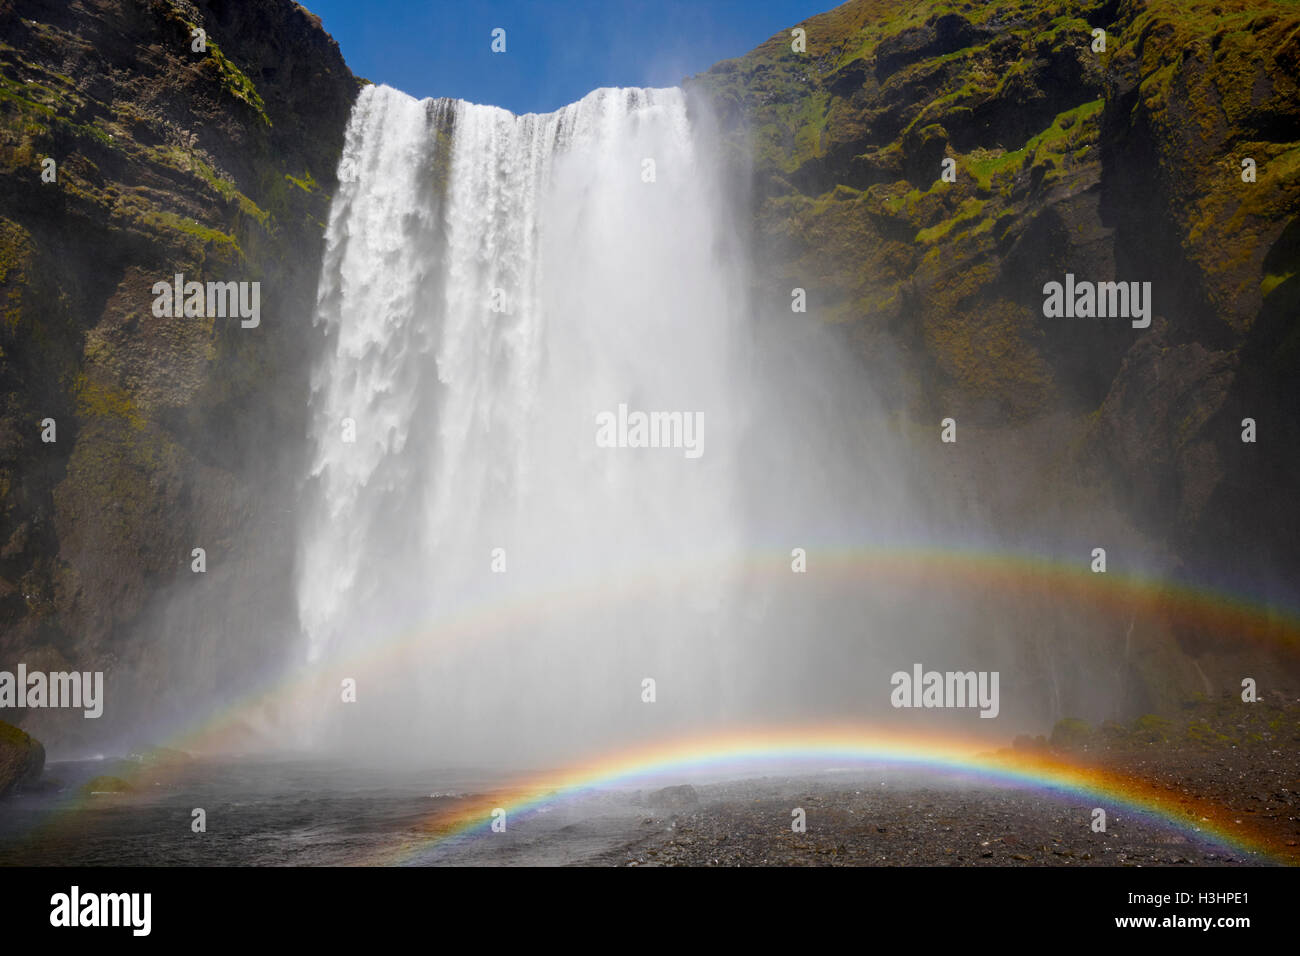 double rainbow at skogafoss waterfall in iceland Stock Photo